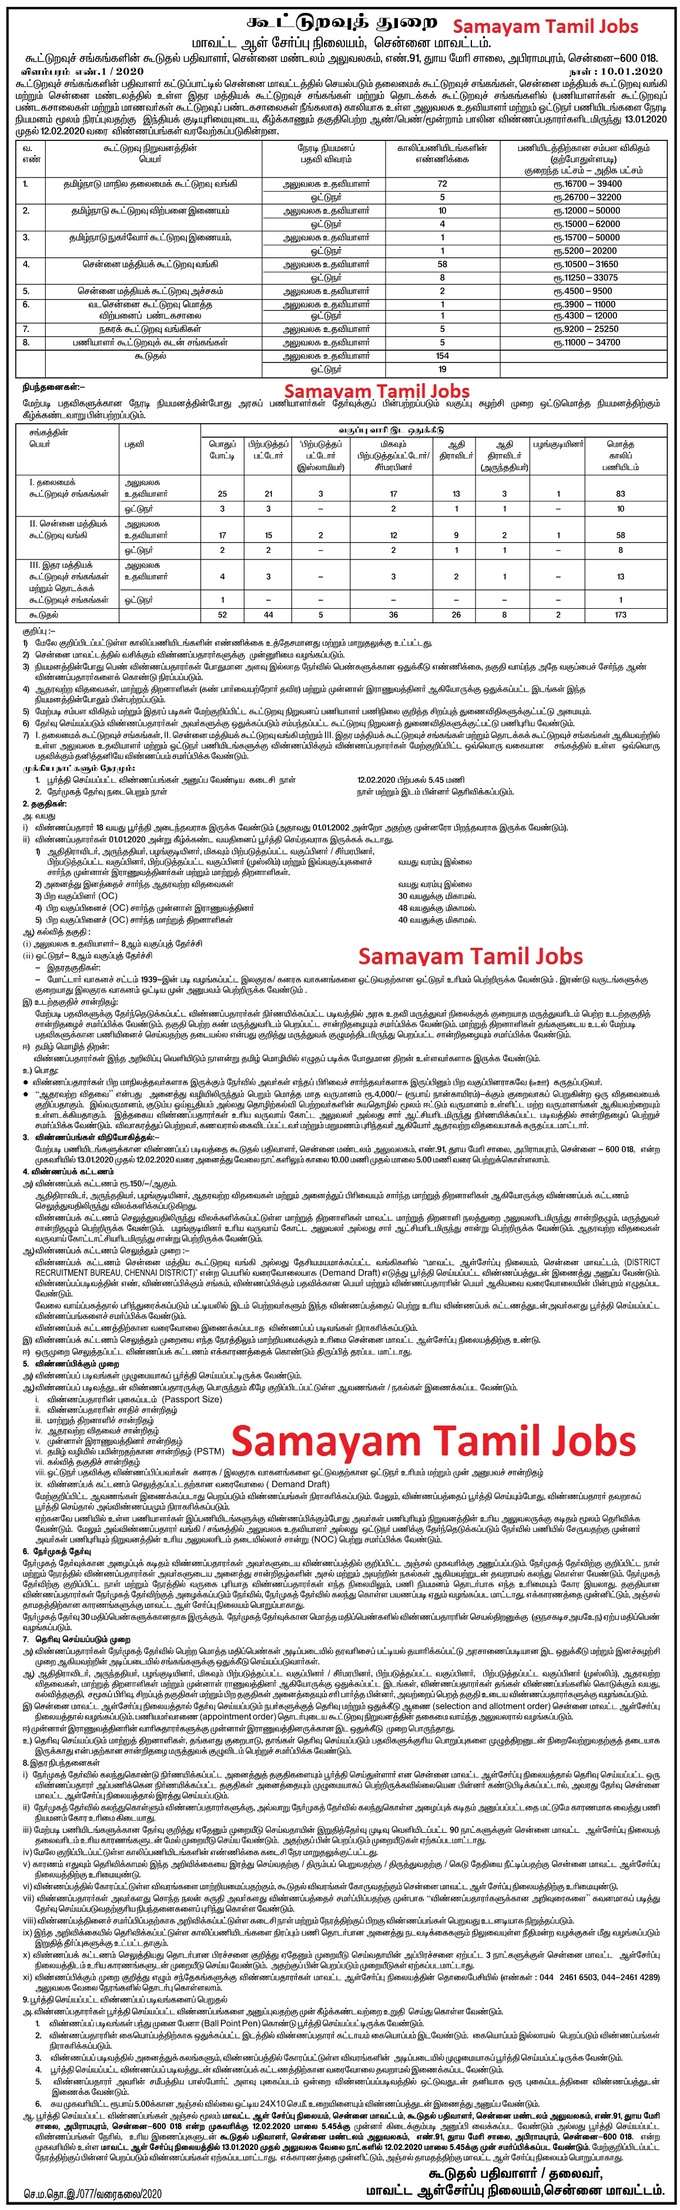 Chennai Cooperative Bank Recruitment Notification 2020